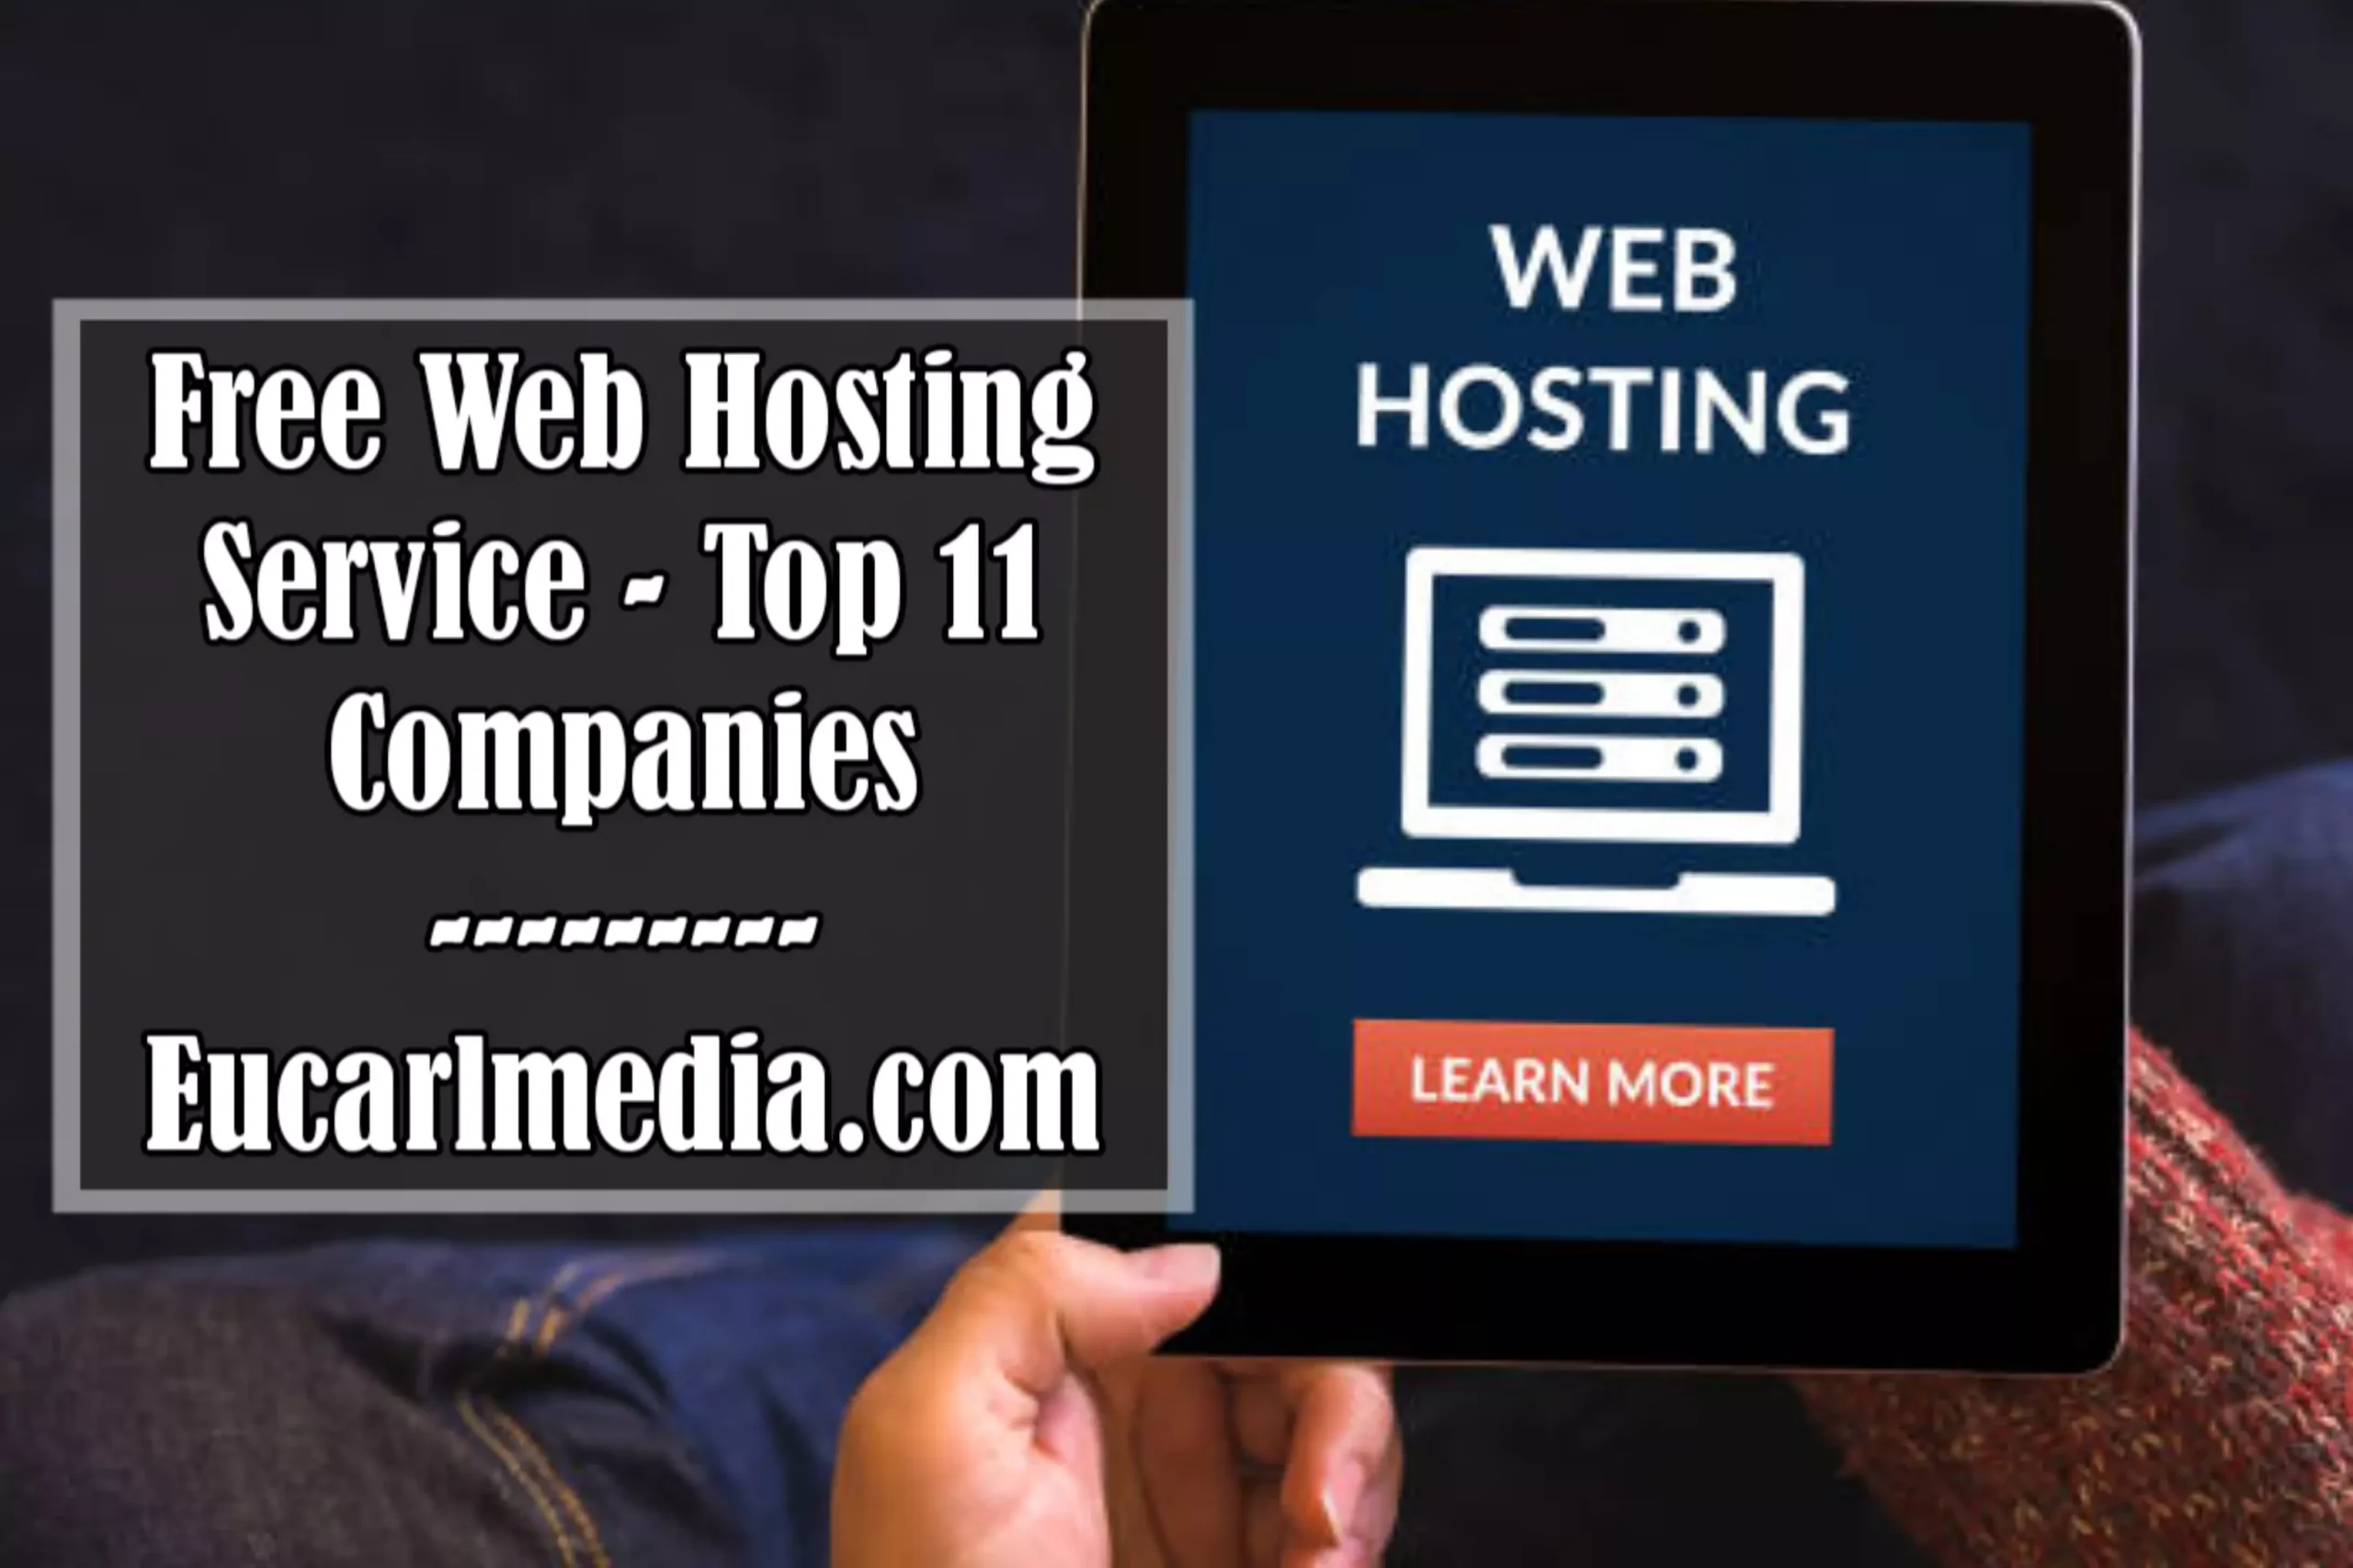 Free Web Hosting Service - Top 11 Companies